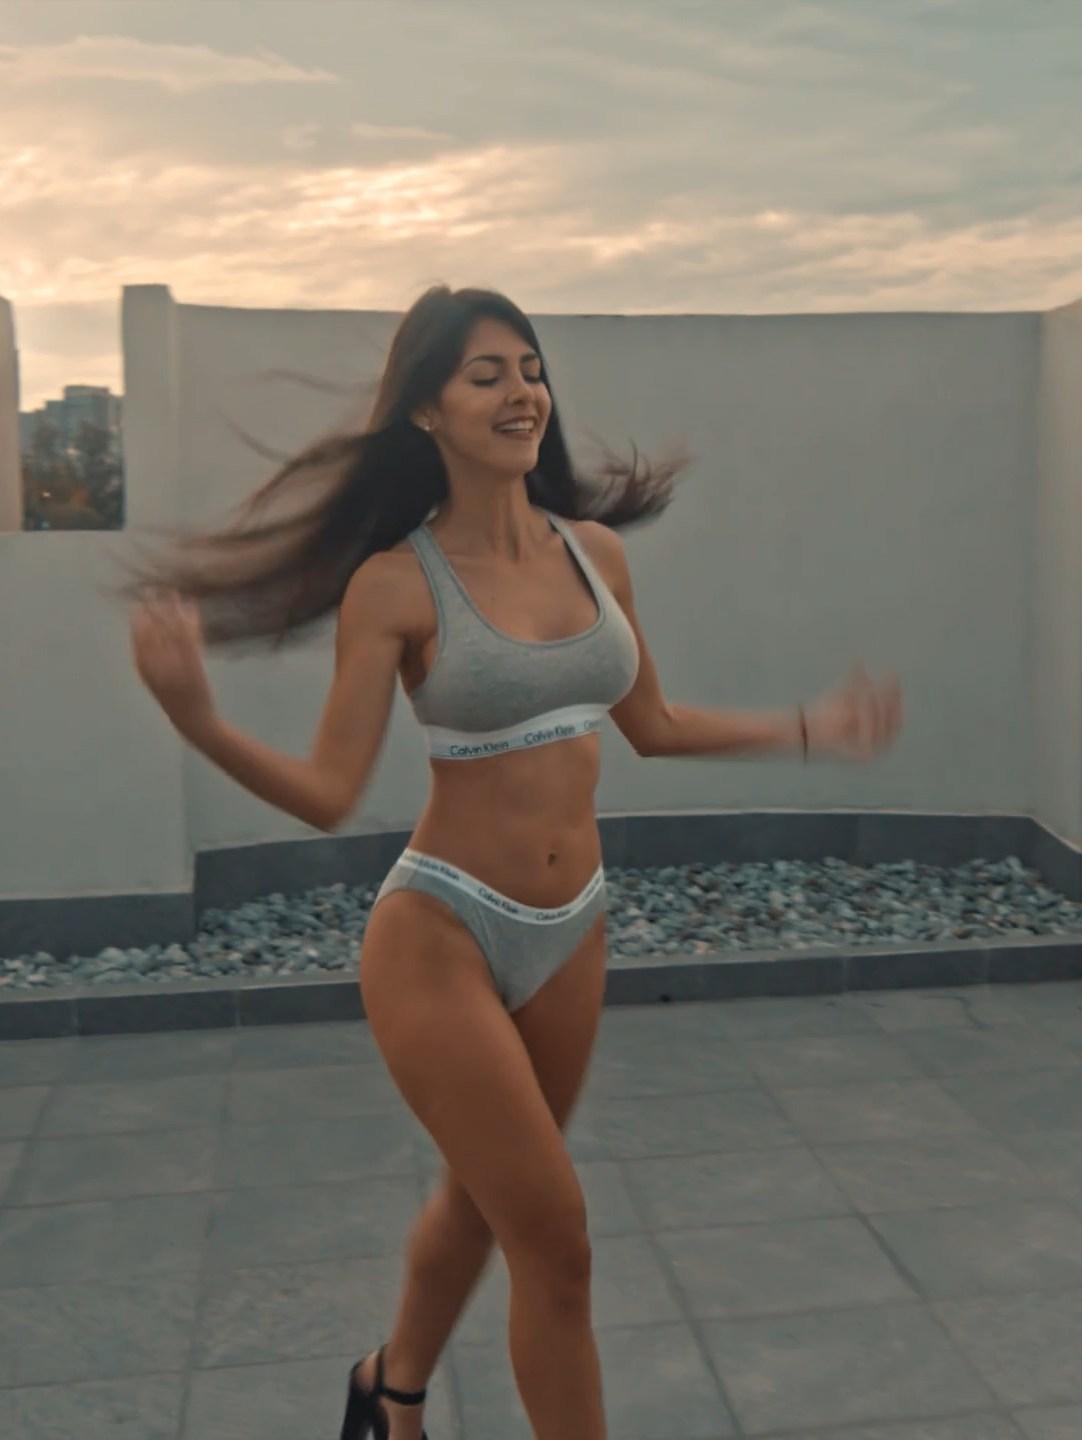 Ari Dugarte Outdoor Underwear Modeling Patreon Video Leaked – Influencers Gonewild